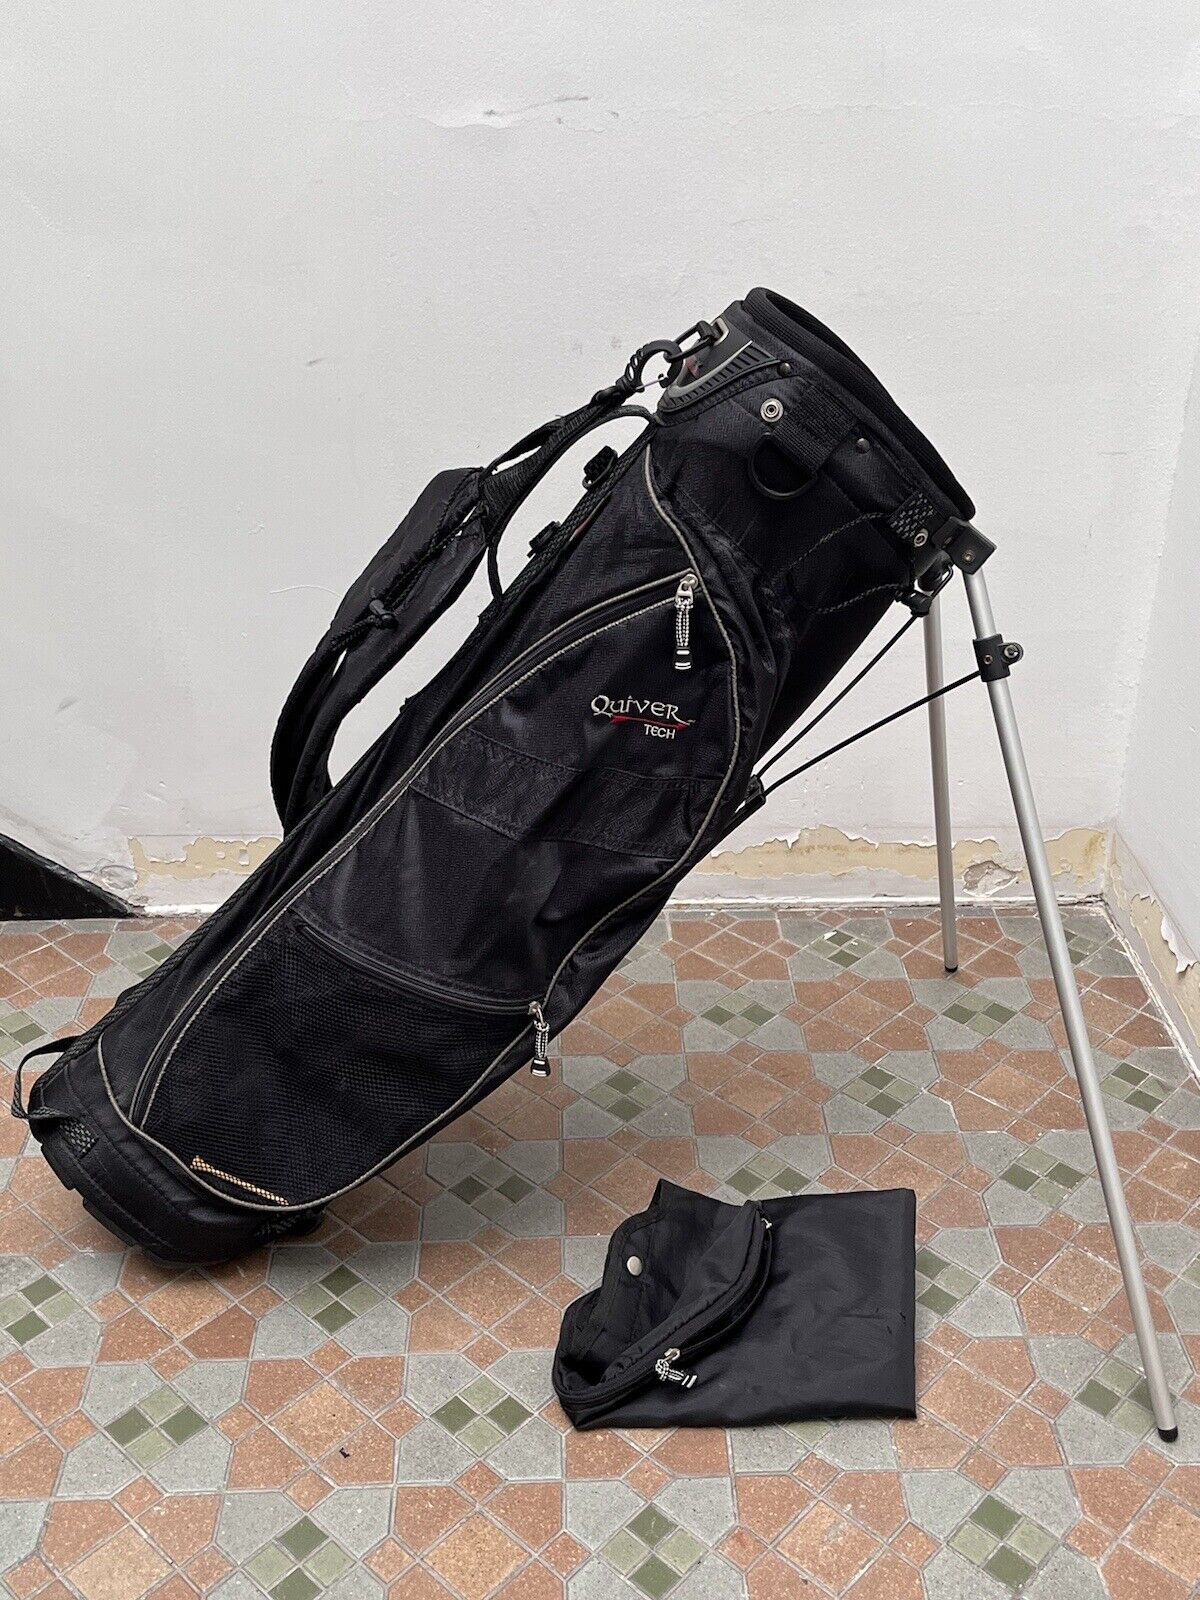 DATREK Quiver Tech Sidekick 4-Way Golf Stand Bag Dual Strap W/Rain Cover - Black